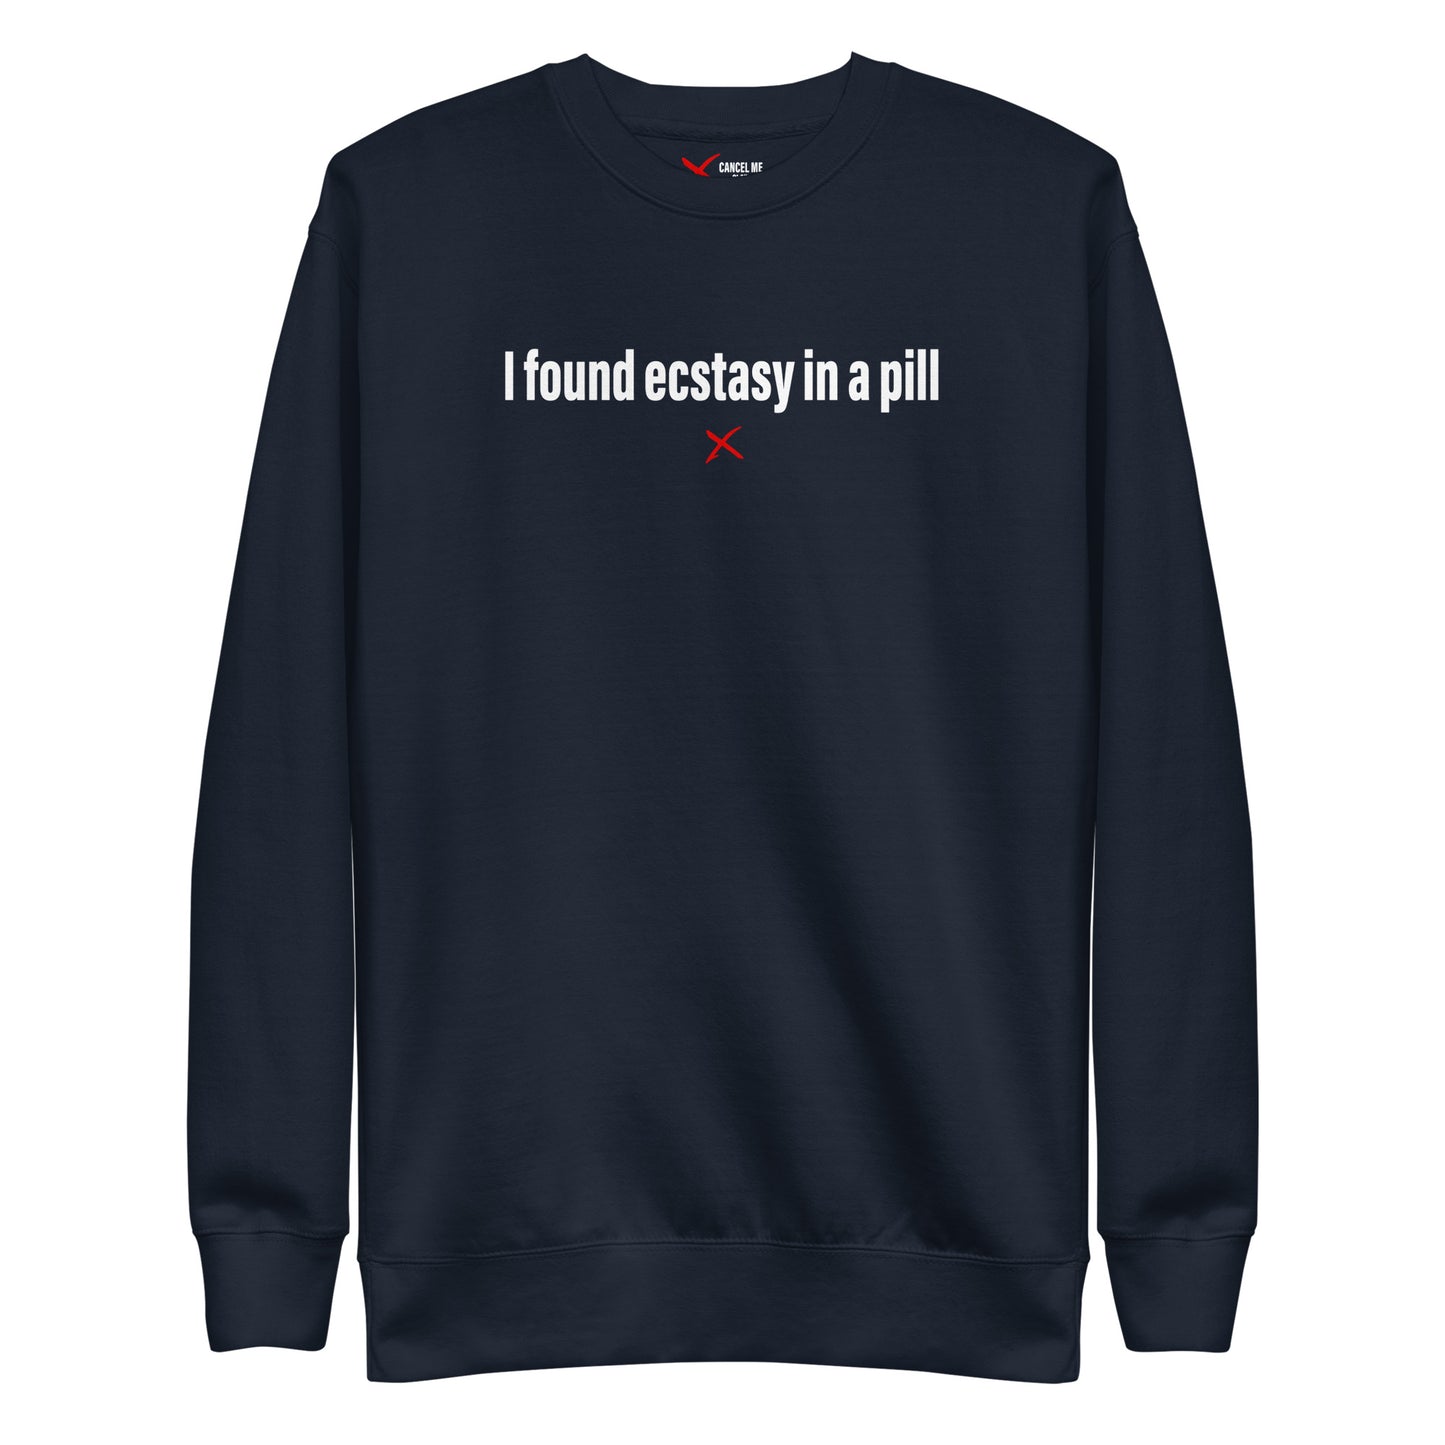 I found ecstasy in a pill - Sweatshirt